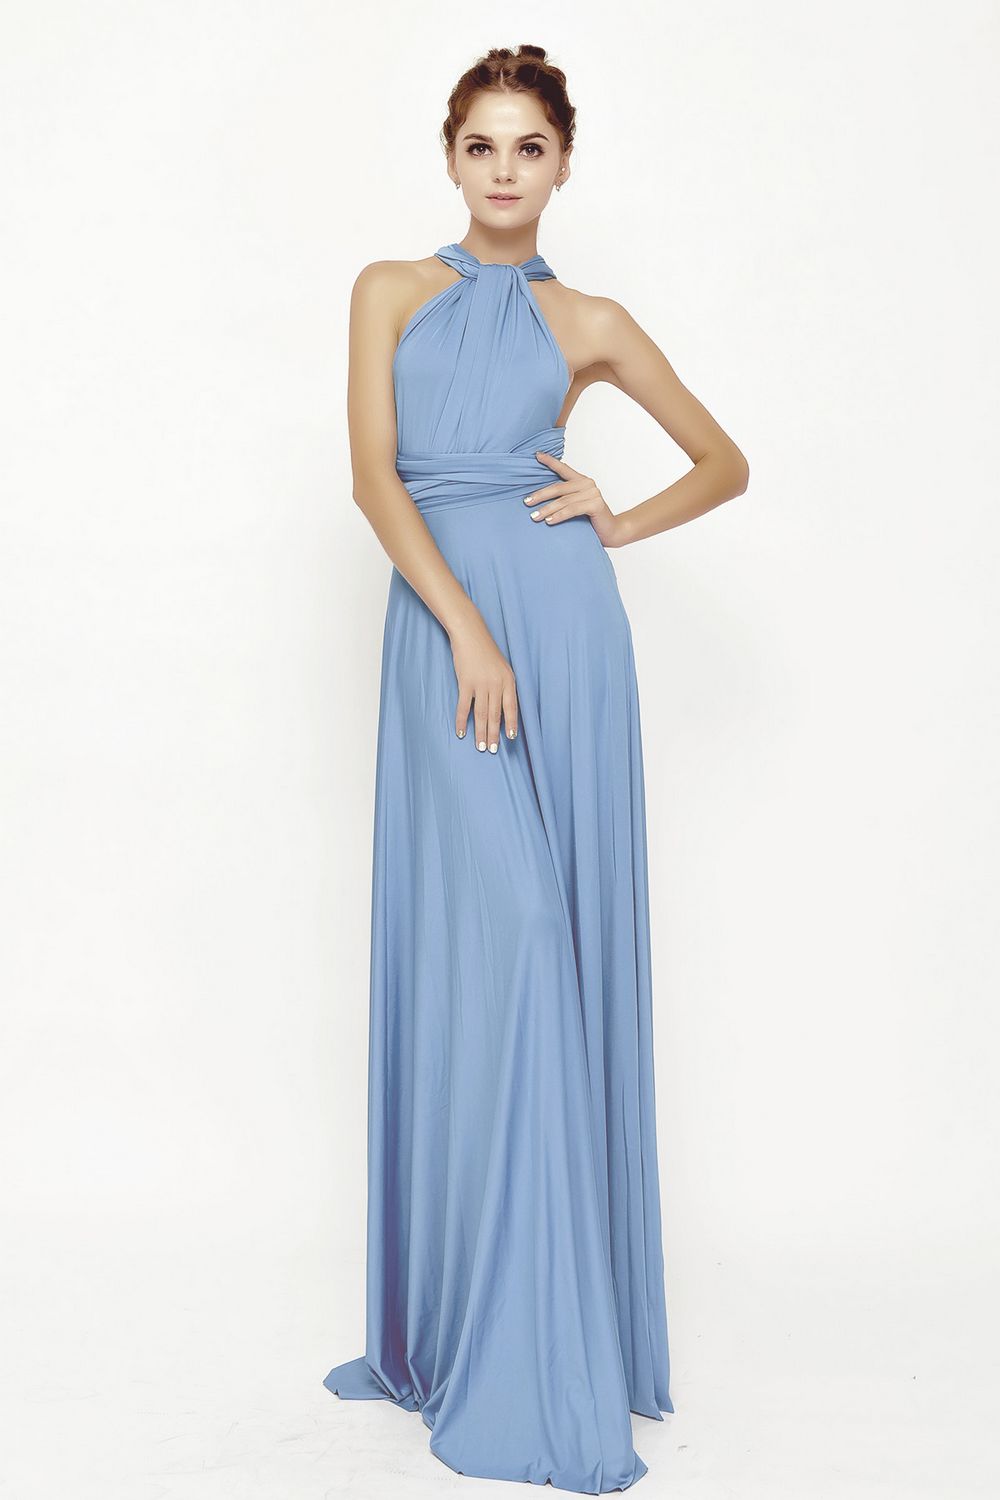 1 Sky Blue Infinity Dress, Convertible Bridesmaid Dress, Evening Dress